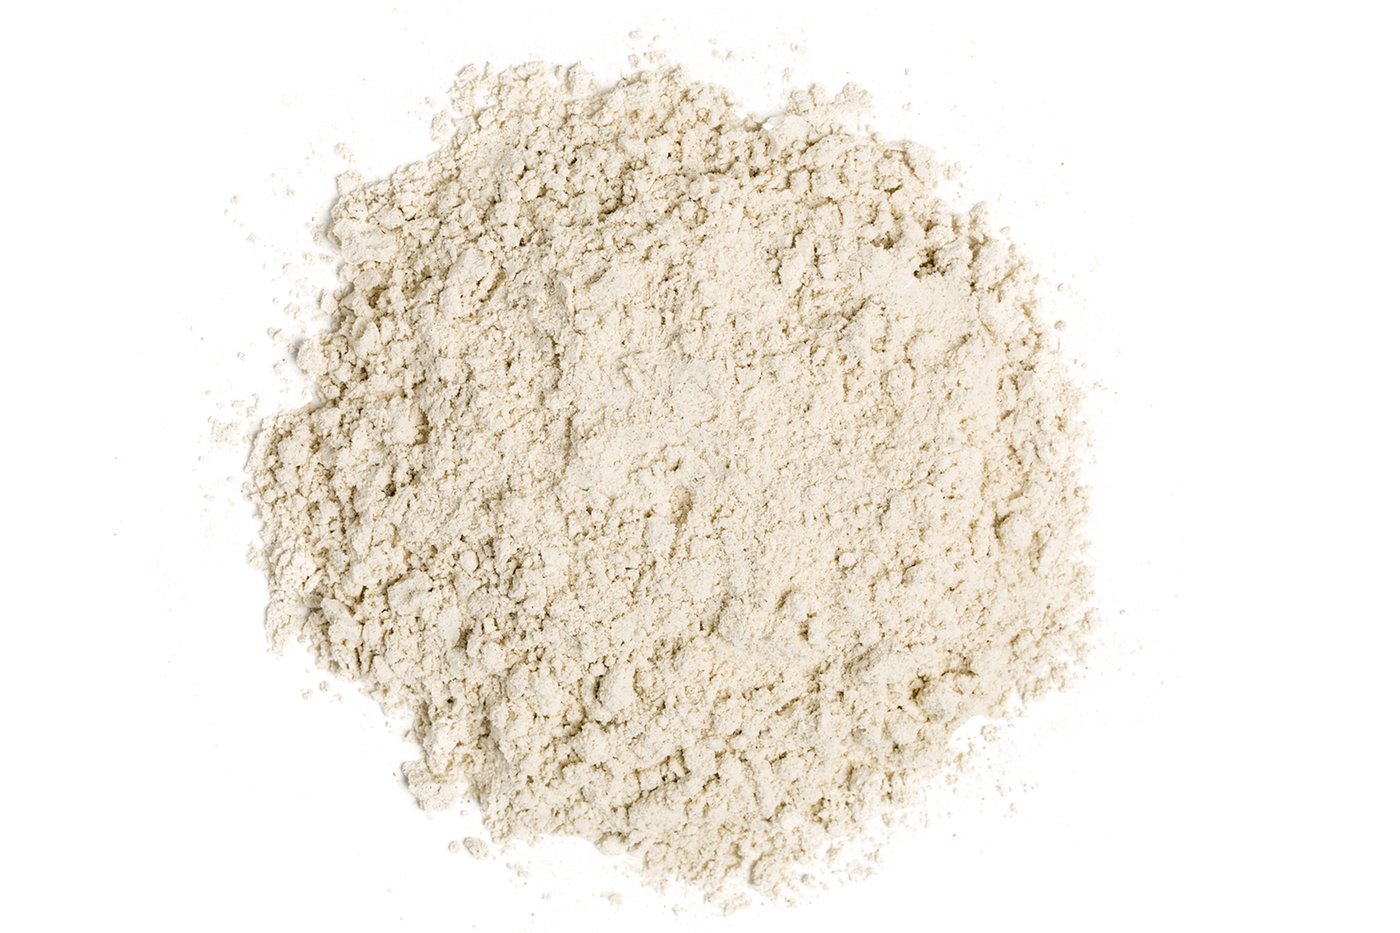 Chestnut Flour image zoom